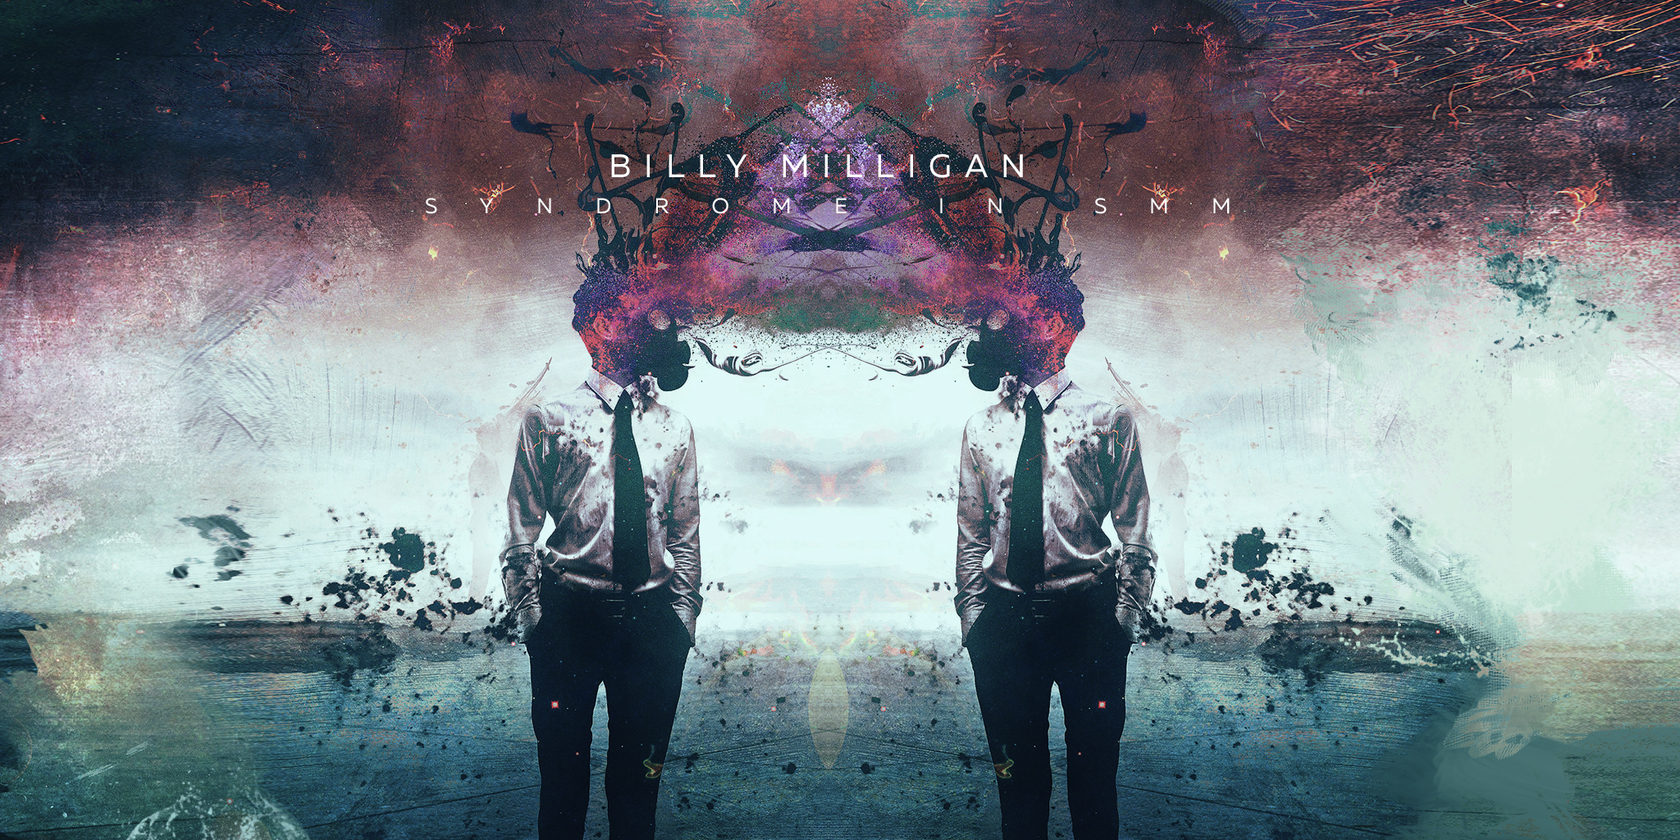 Billy milligan